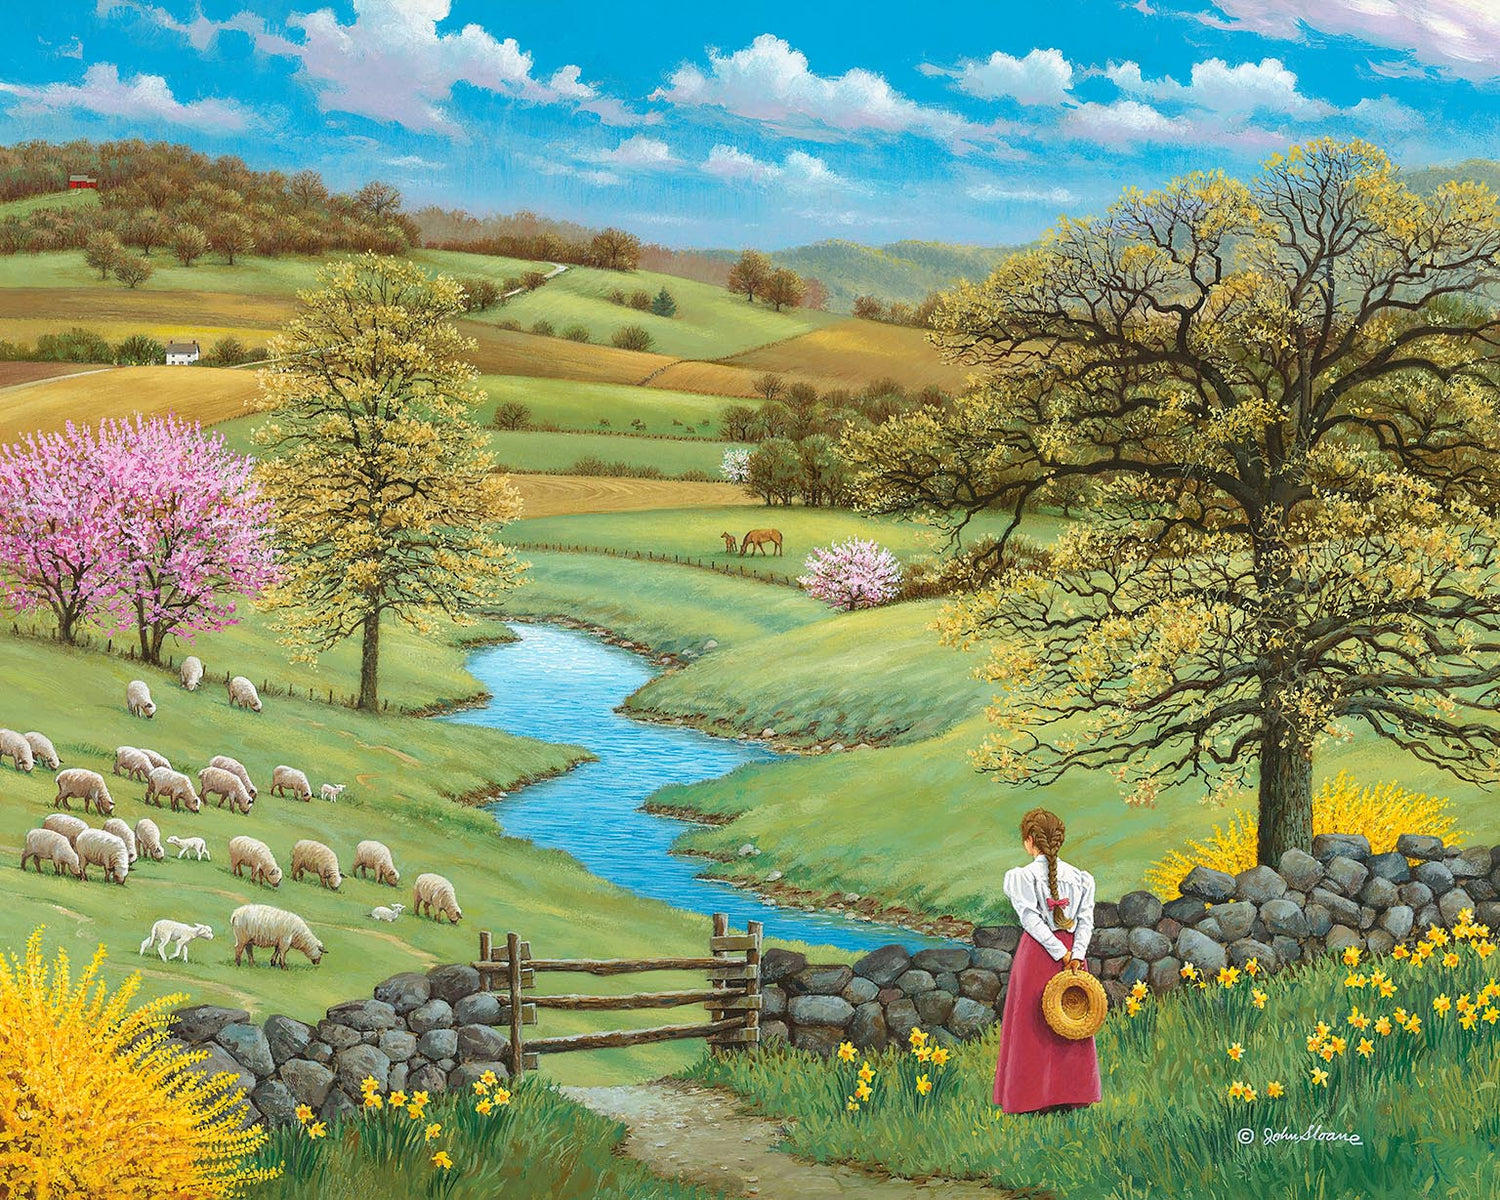 "Feels Like Spring" by John Sloane